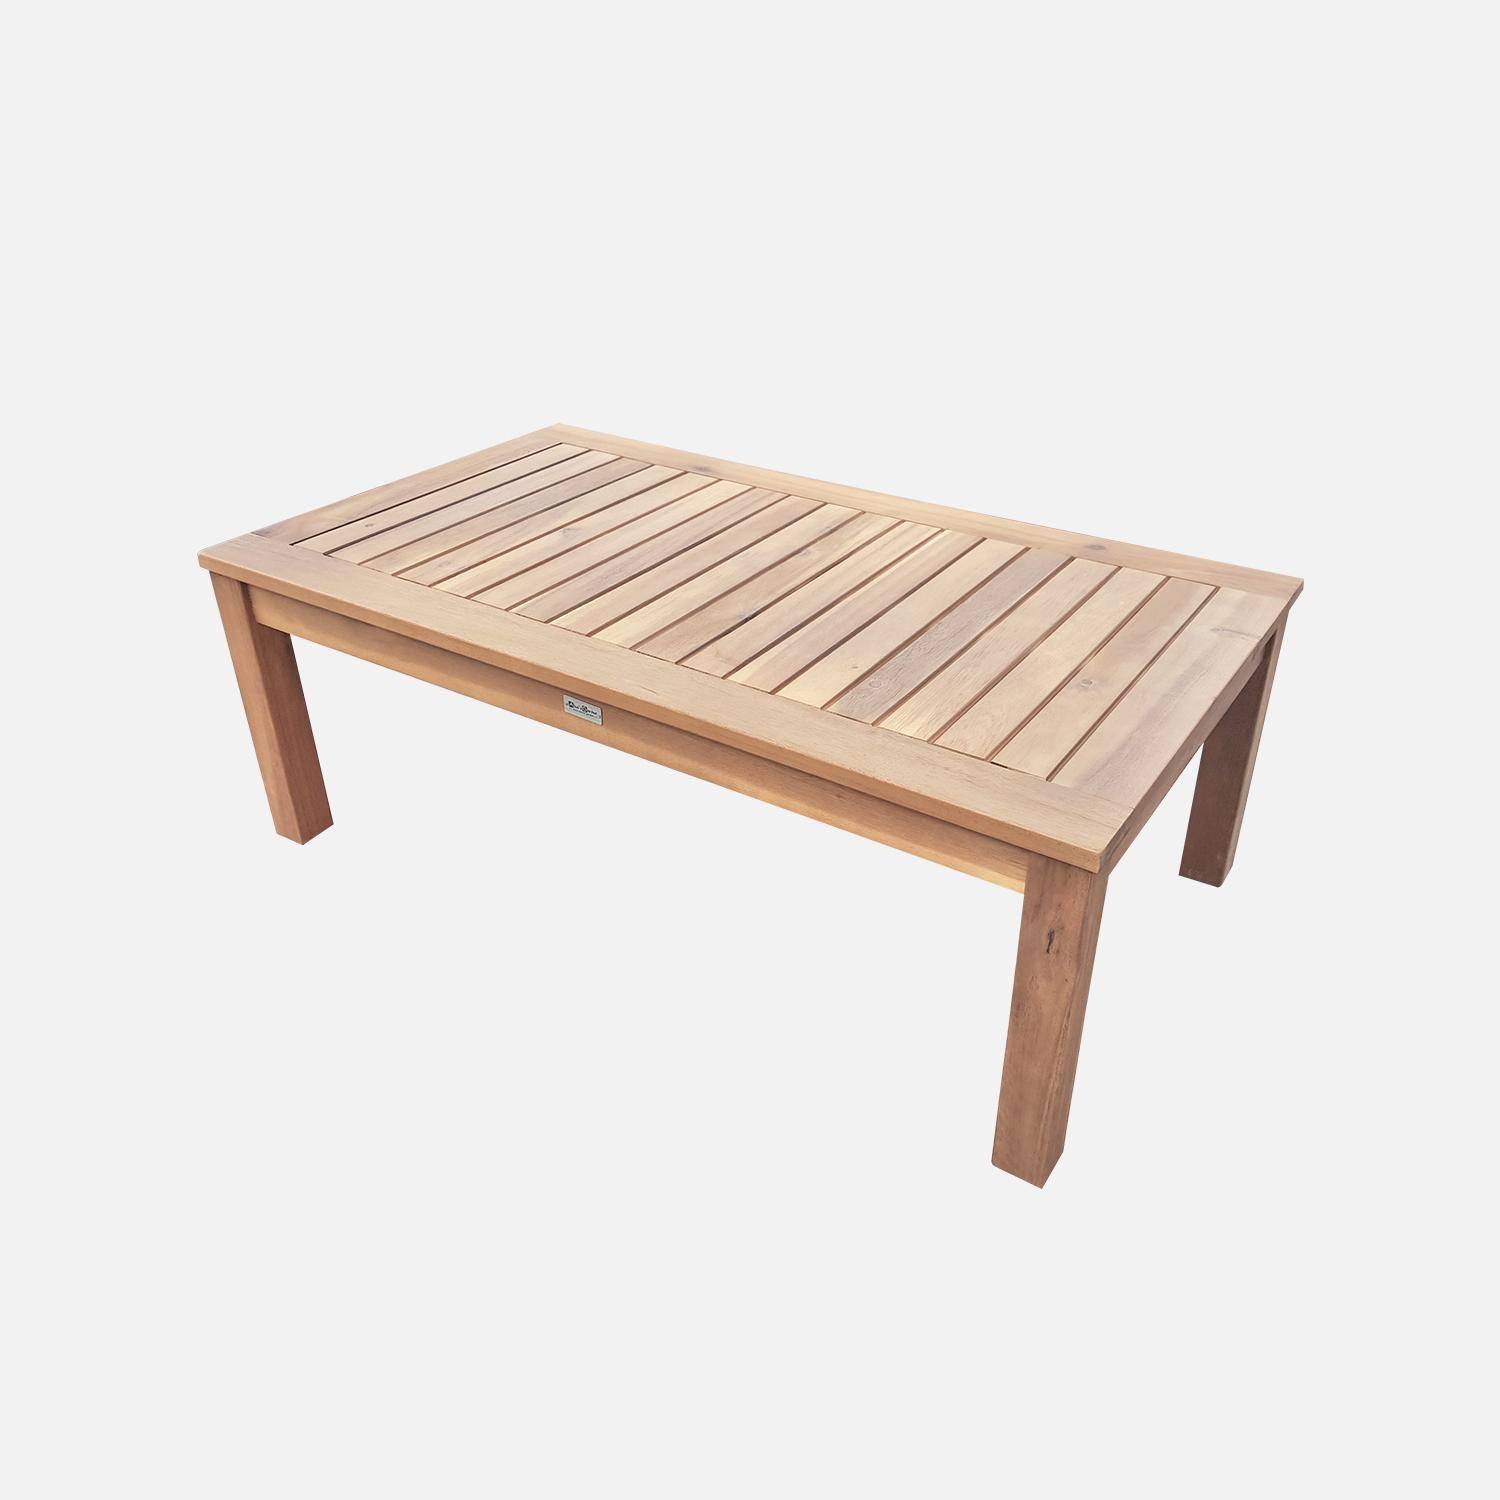 4-seater wooden garden sofa - Acacia wood sofa, armchairs and coffee table, designer piece  - Ushuaia - Sage green,sweeek,Photo5